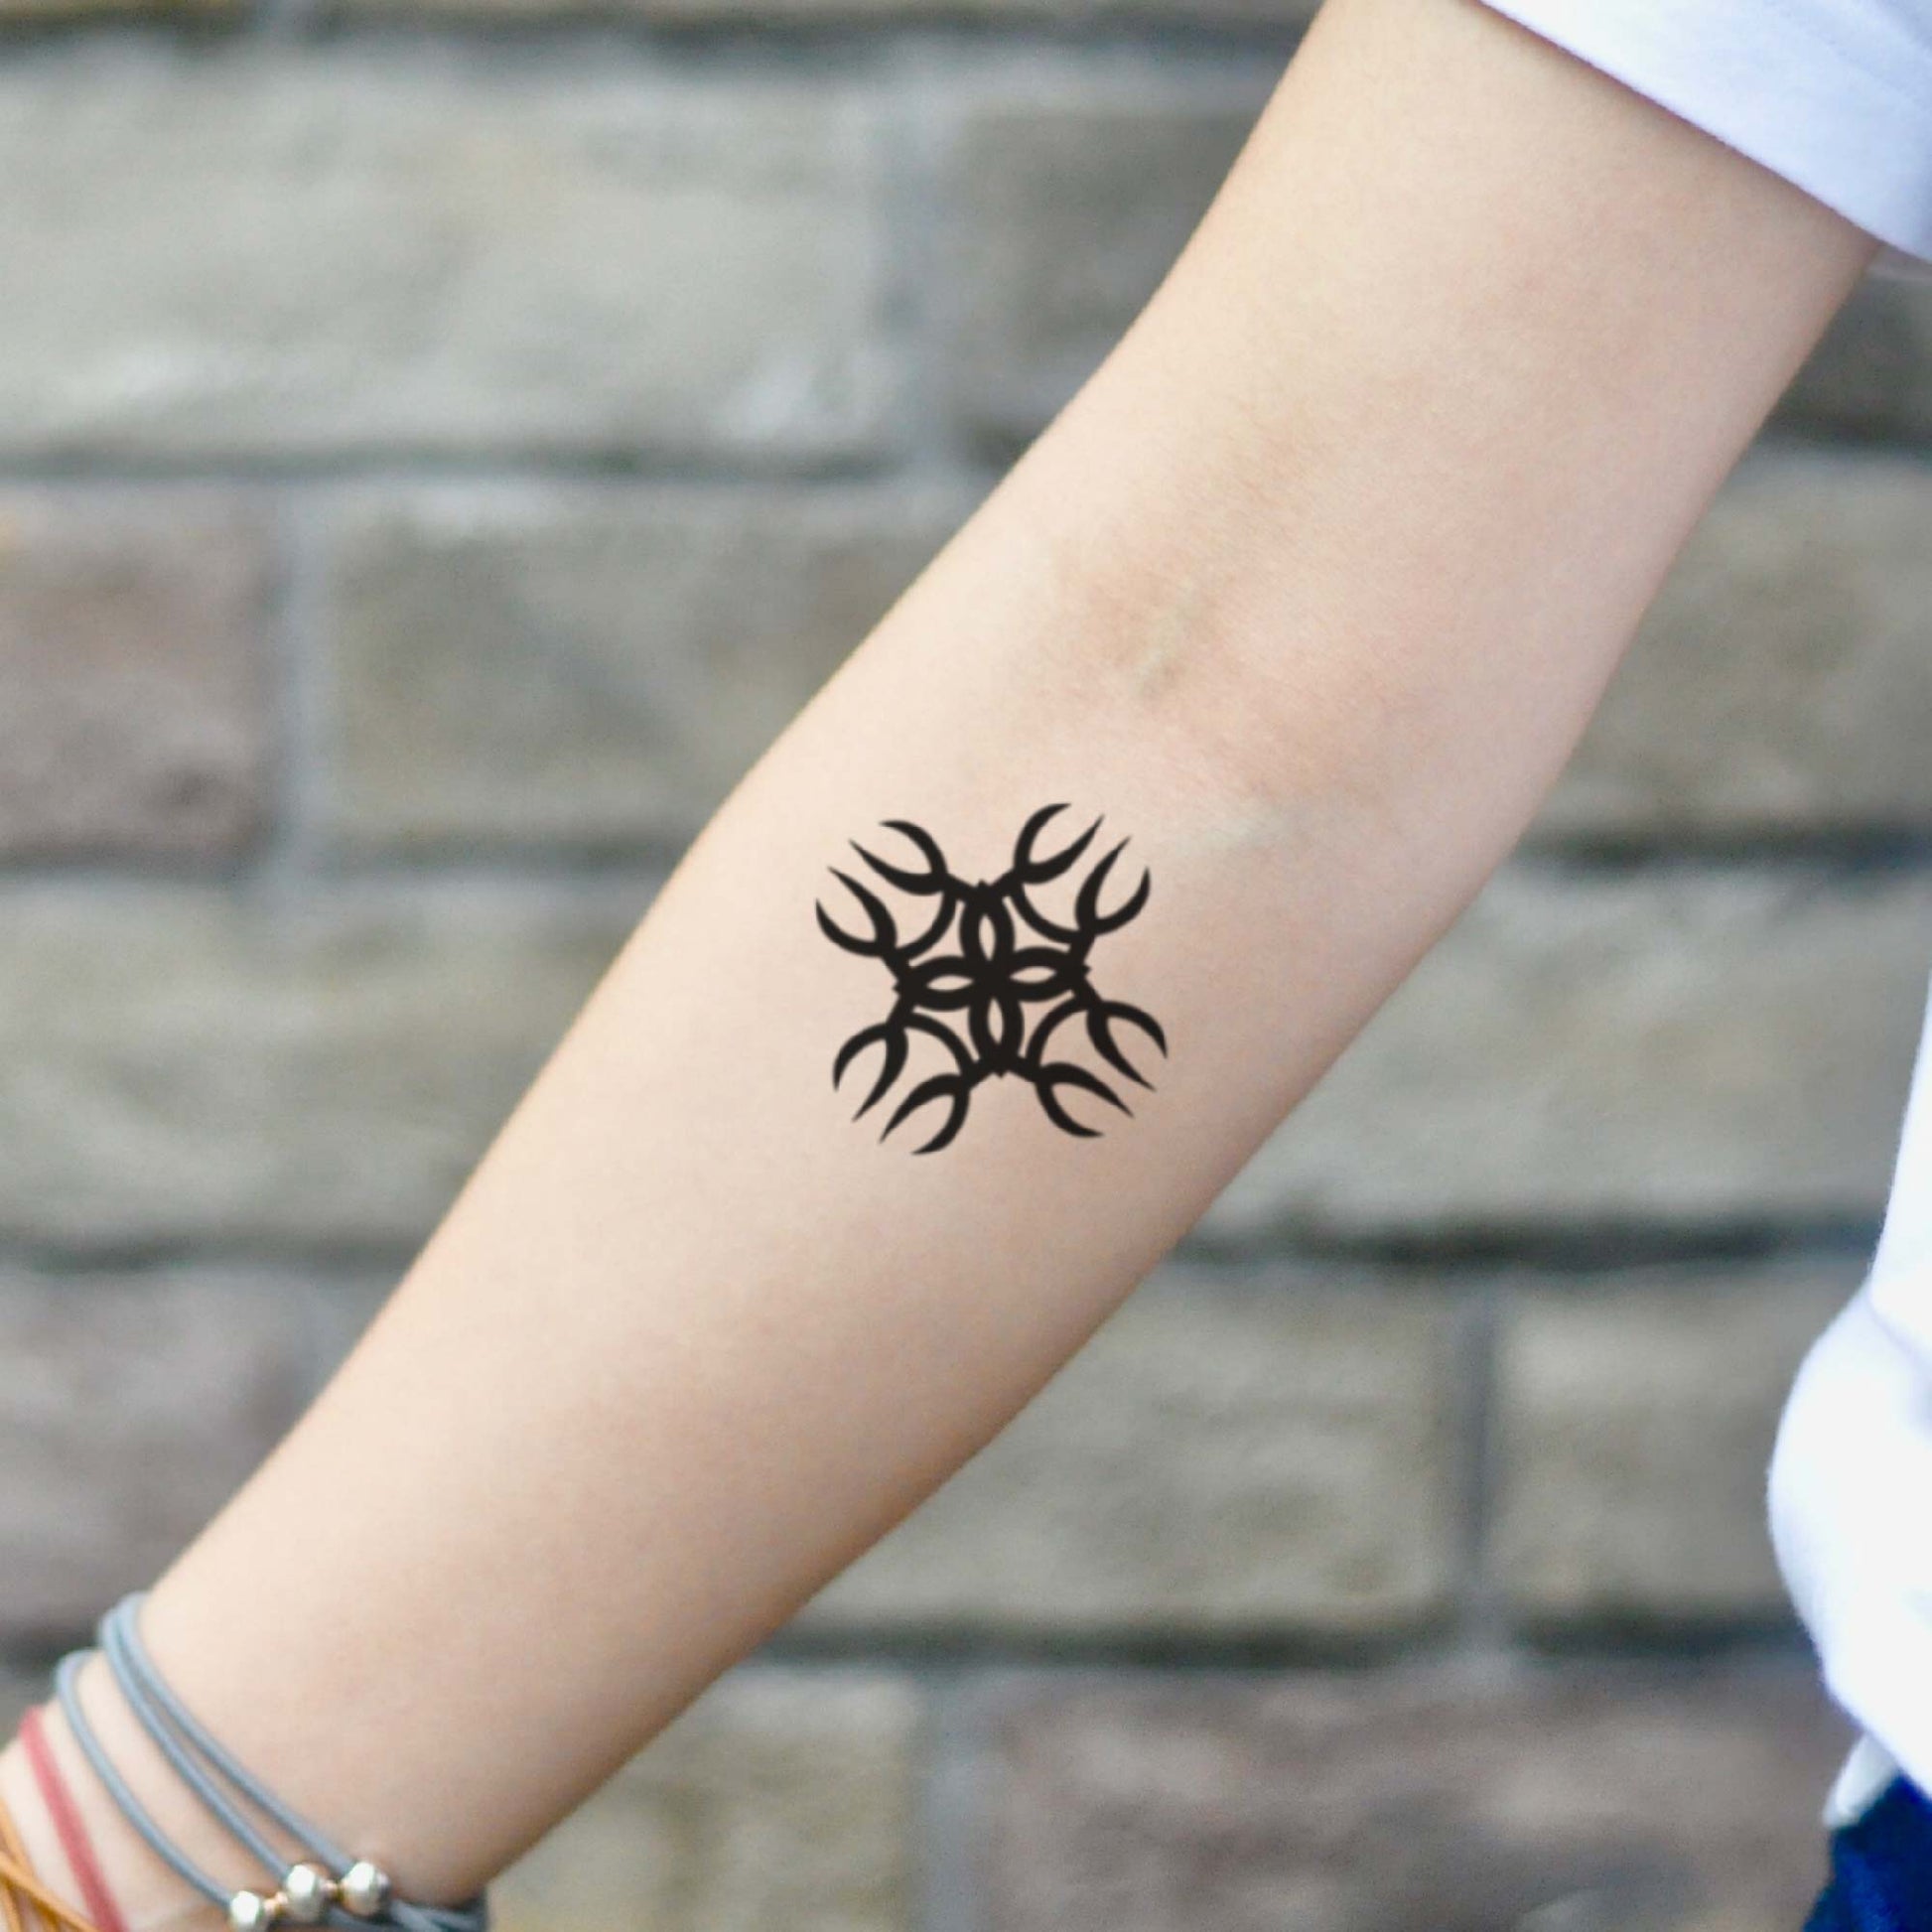 fake small diverse diversity symbol geometric temporary tattoo sticker design idea on inner upper arm forearm